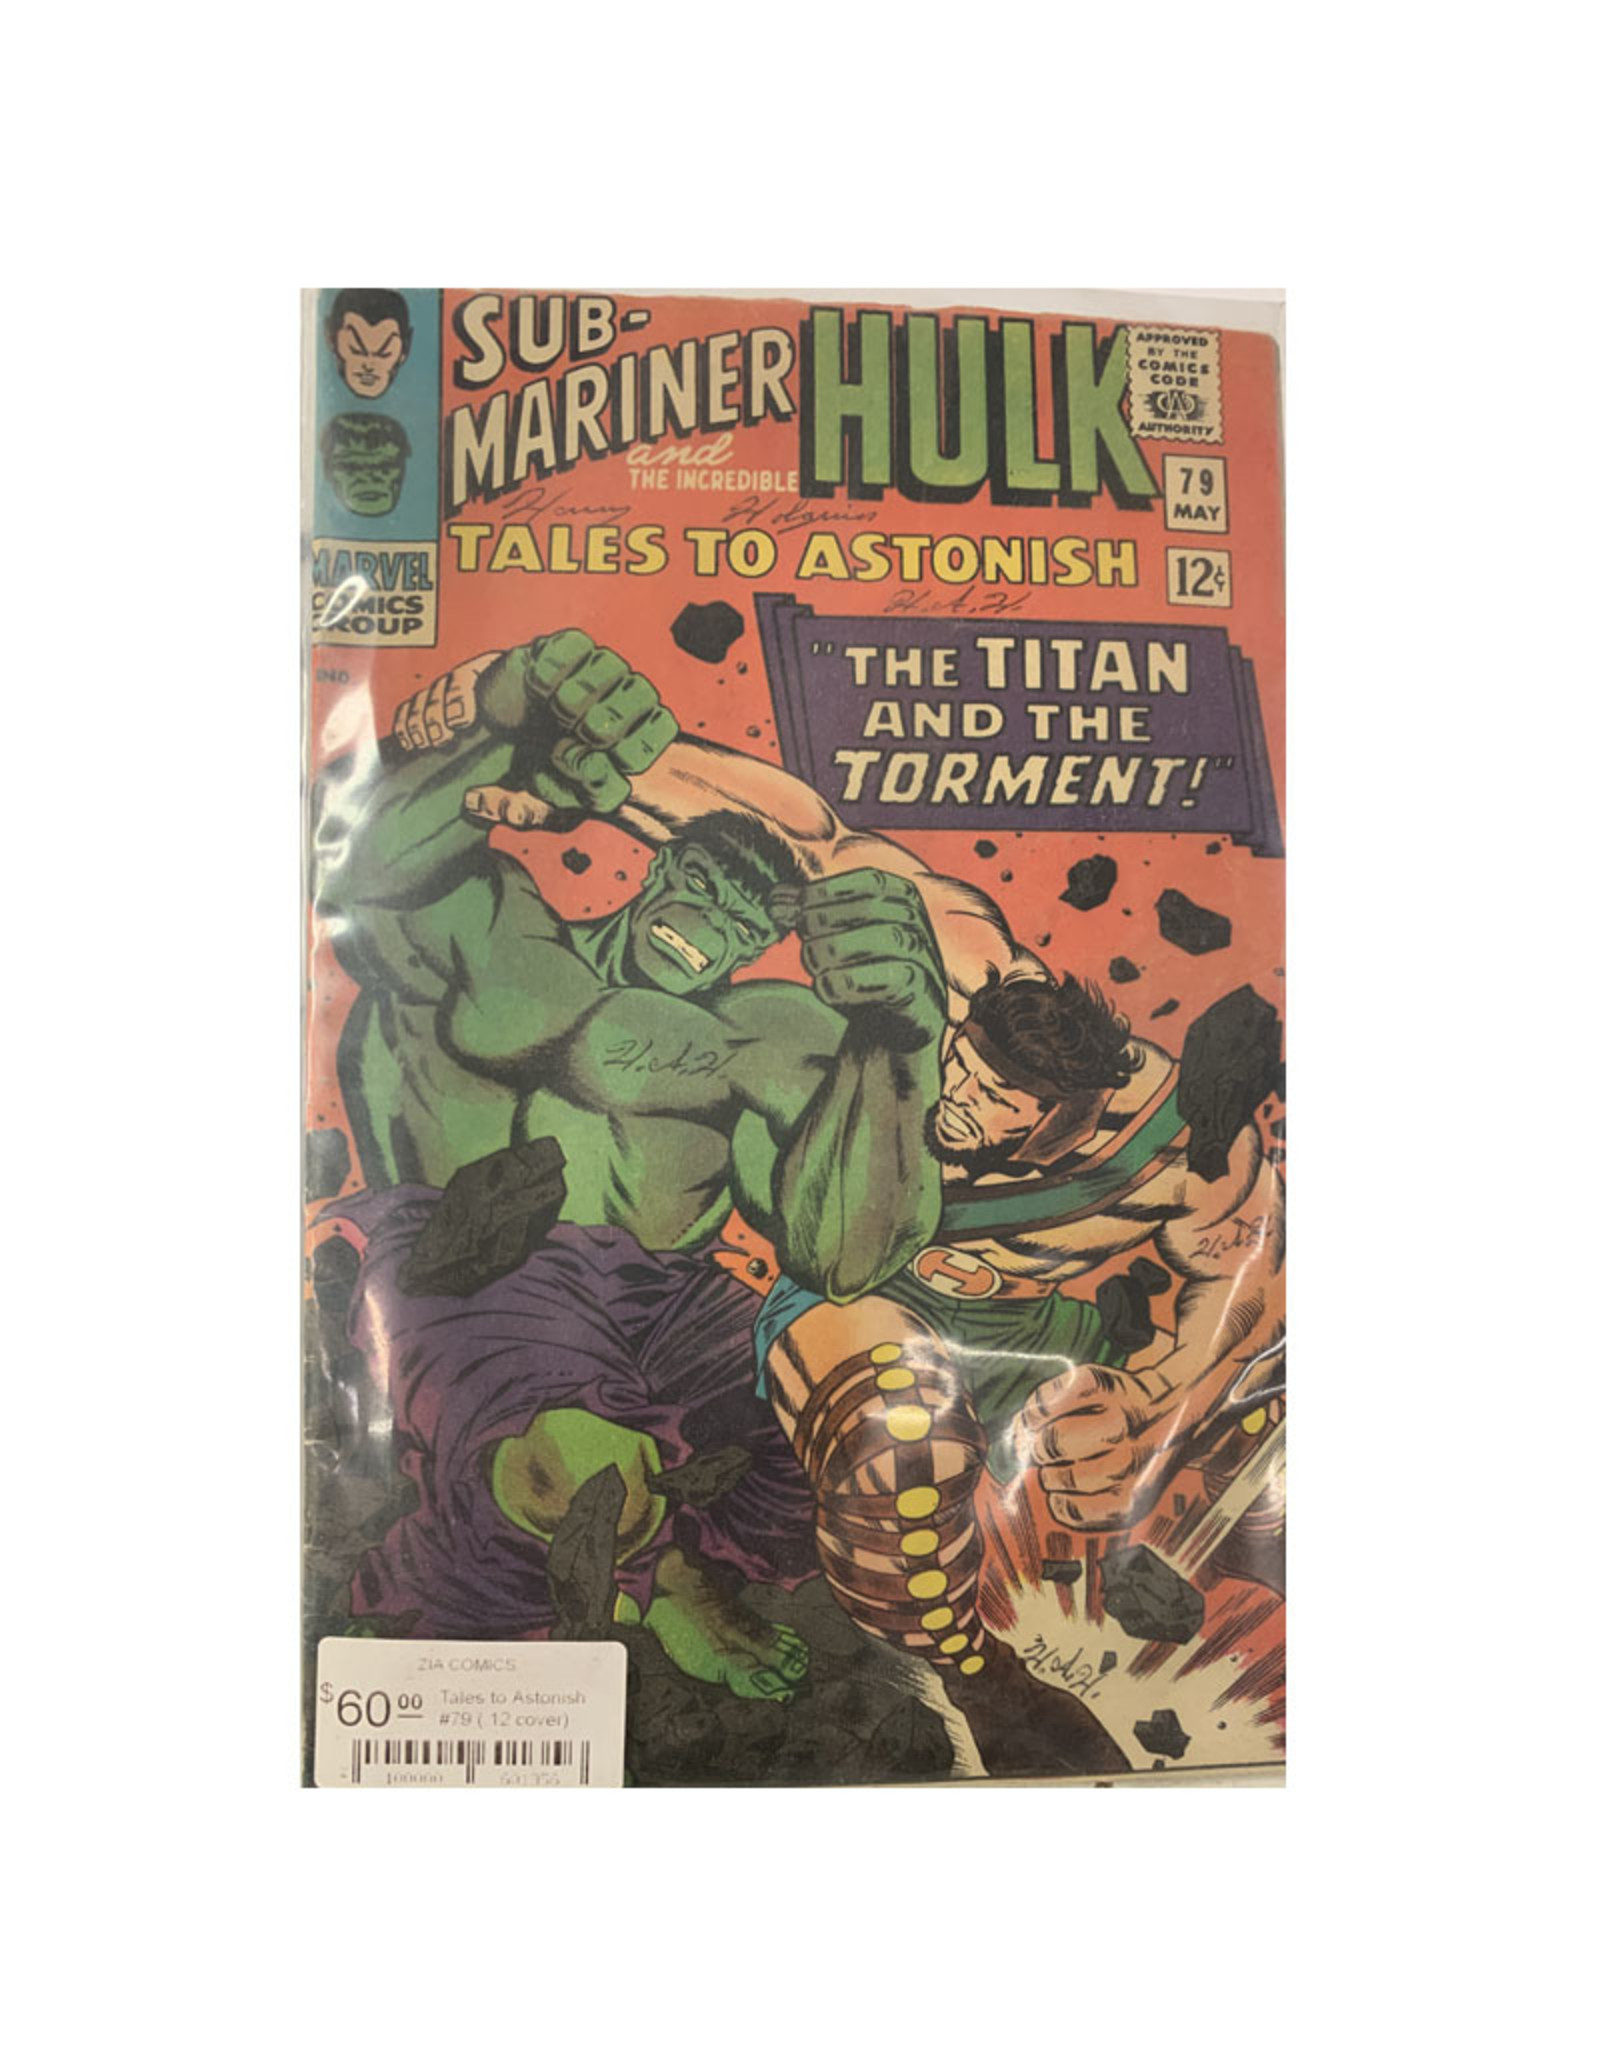 Marvel Comics Tales to Astonish #79 (.12 cover)